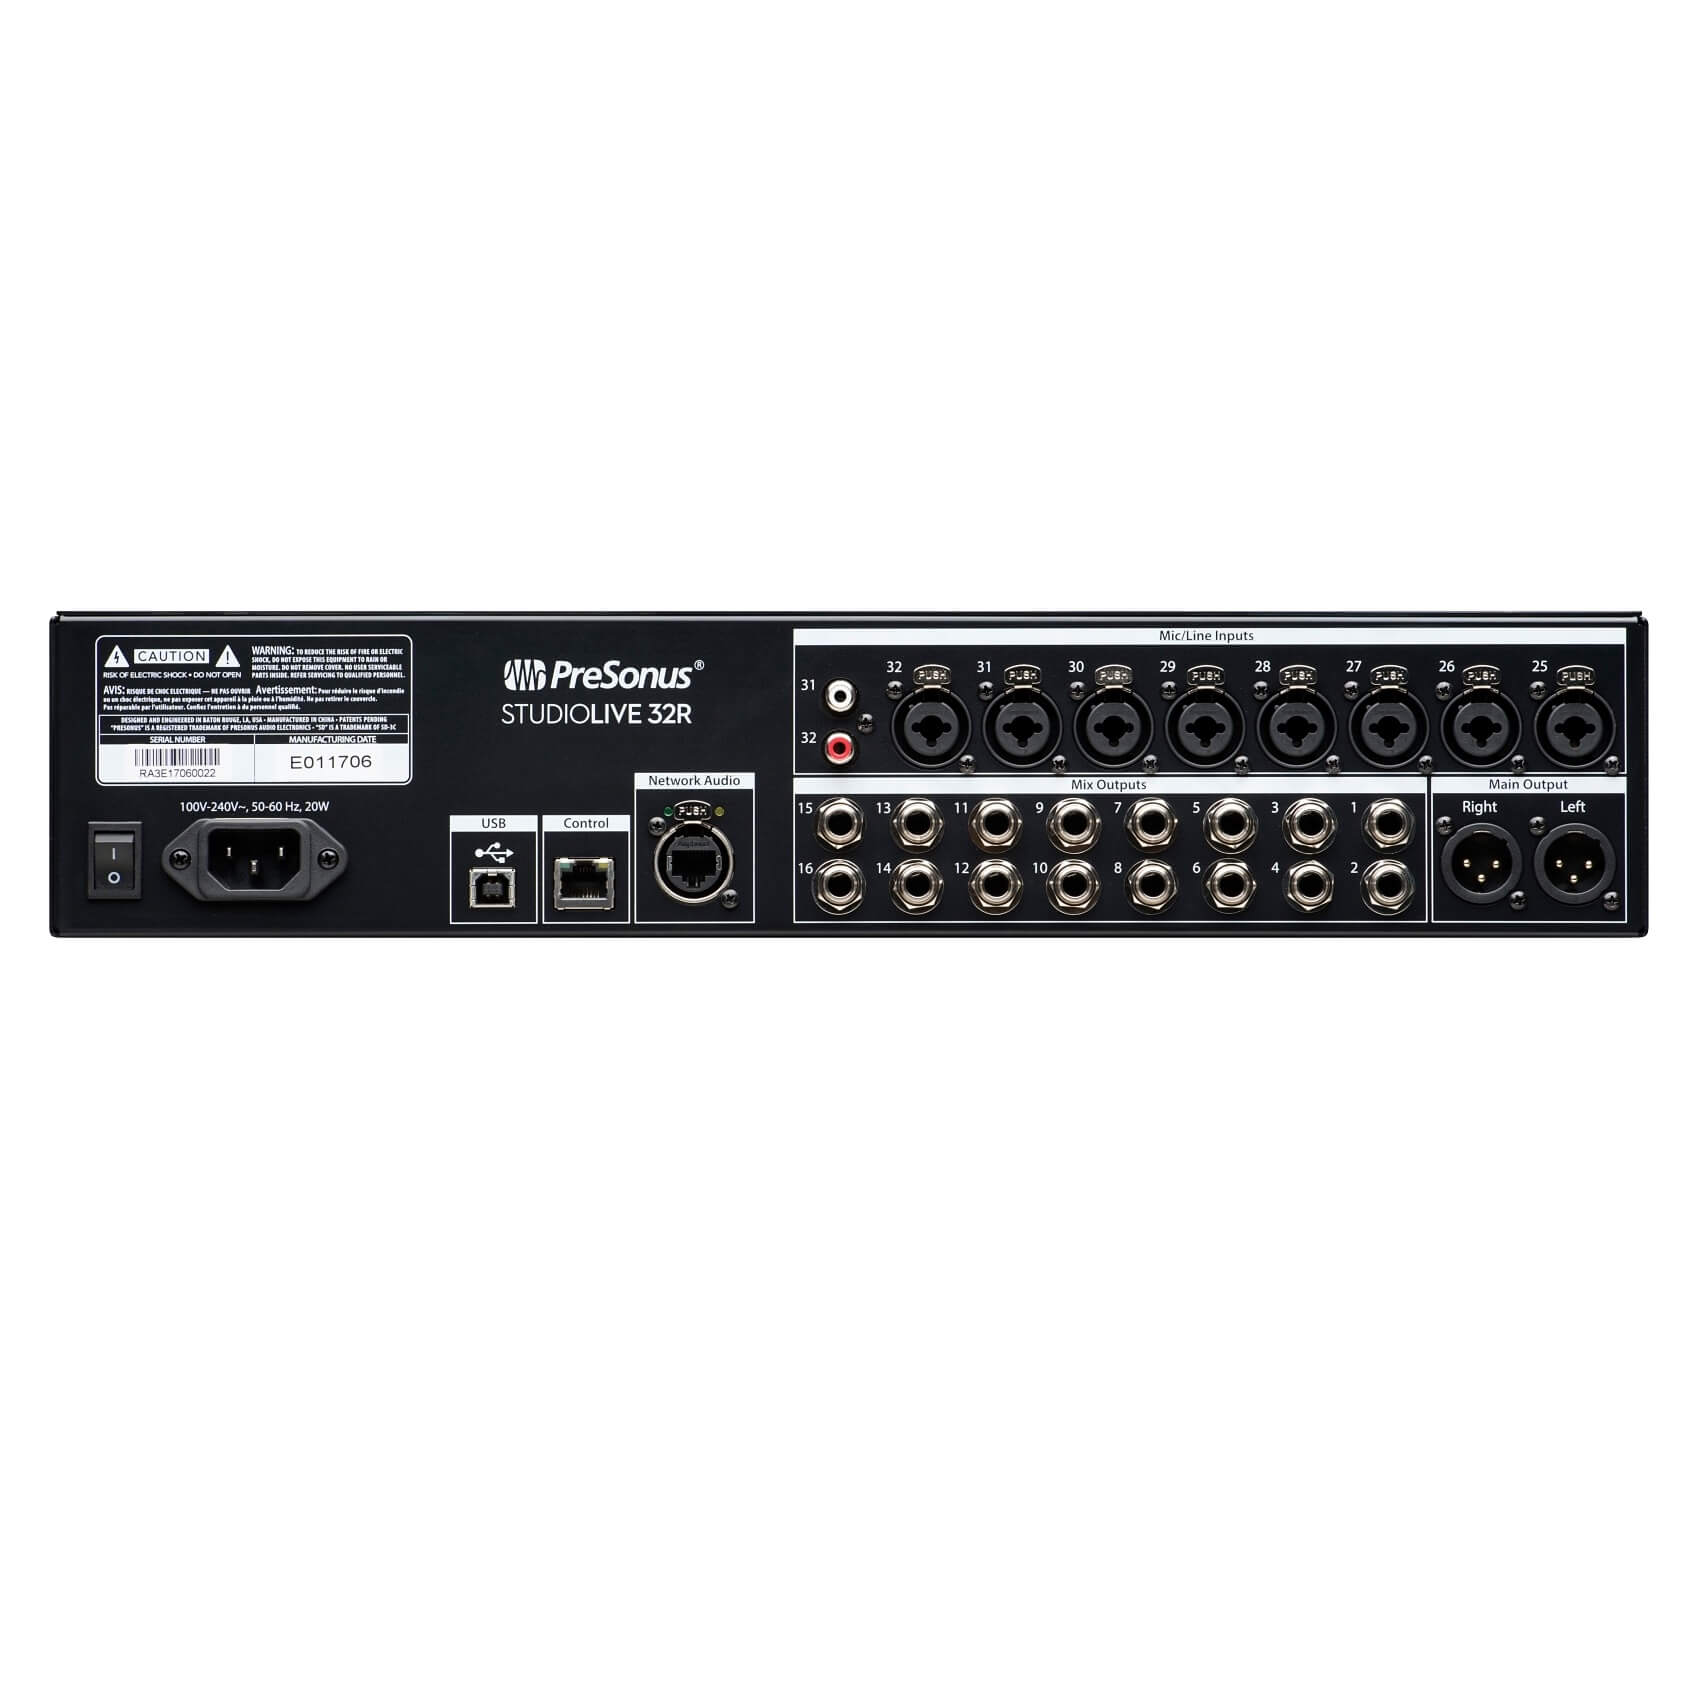 PreSonus StudioLive Series III 32R Digital Rack Mixer, rear